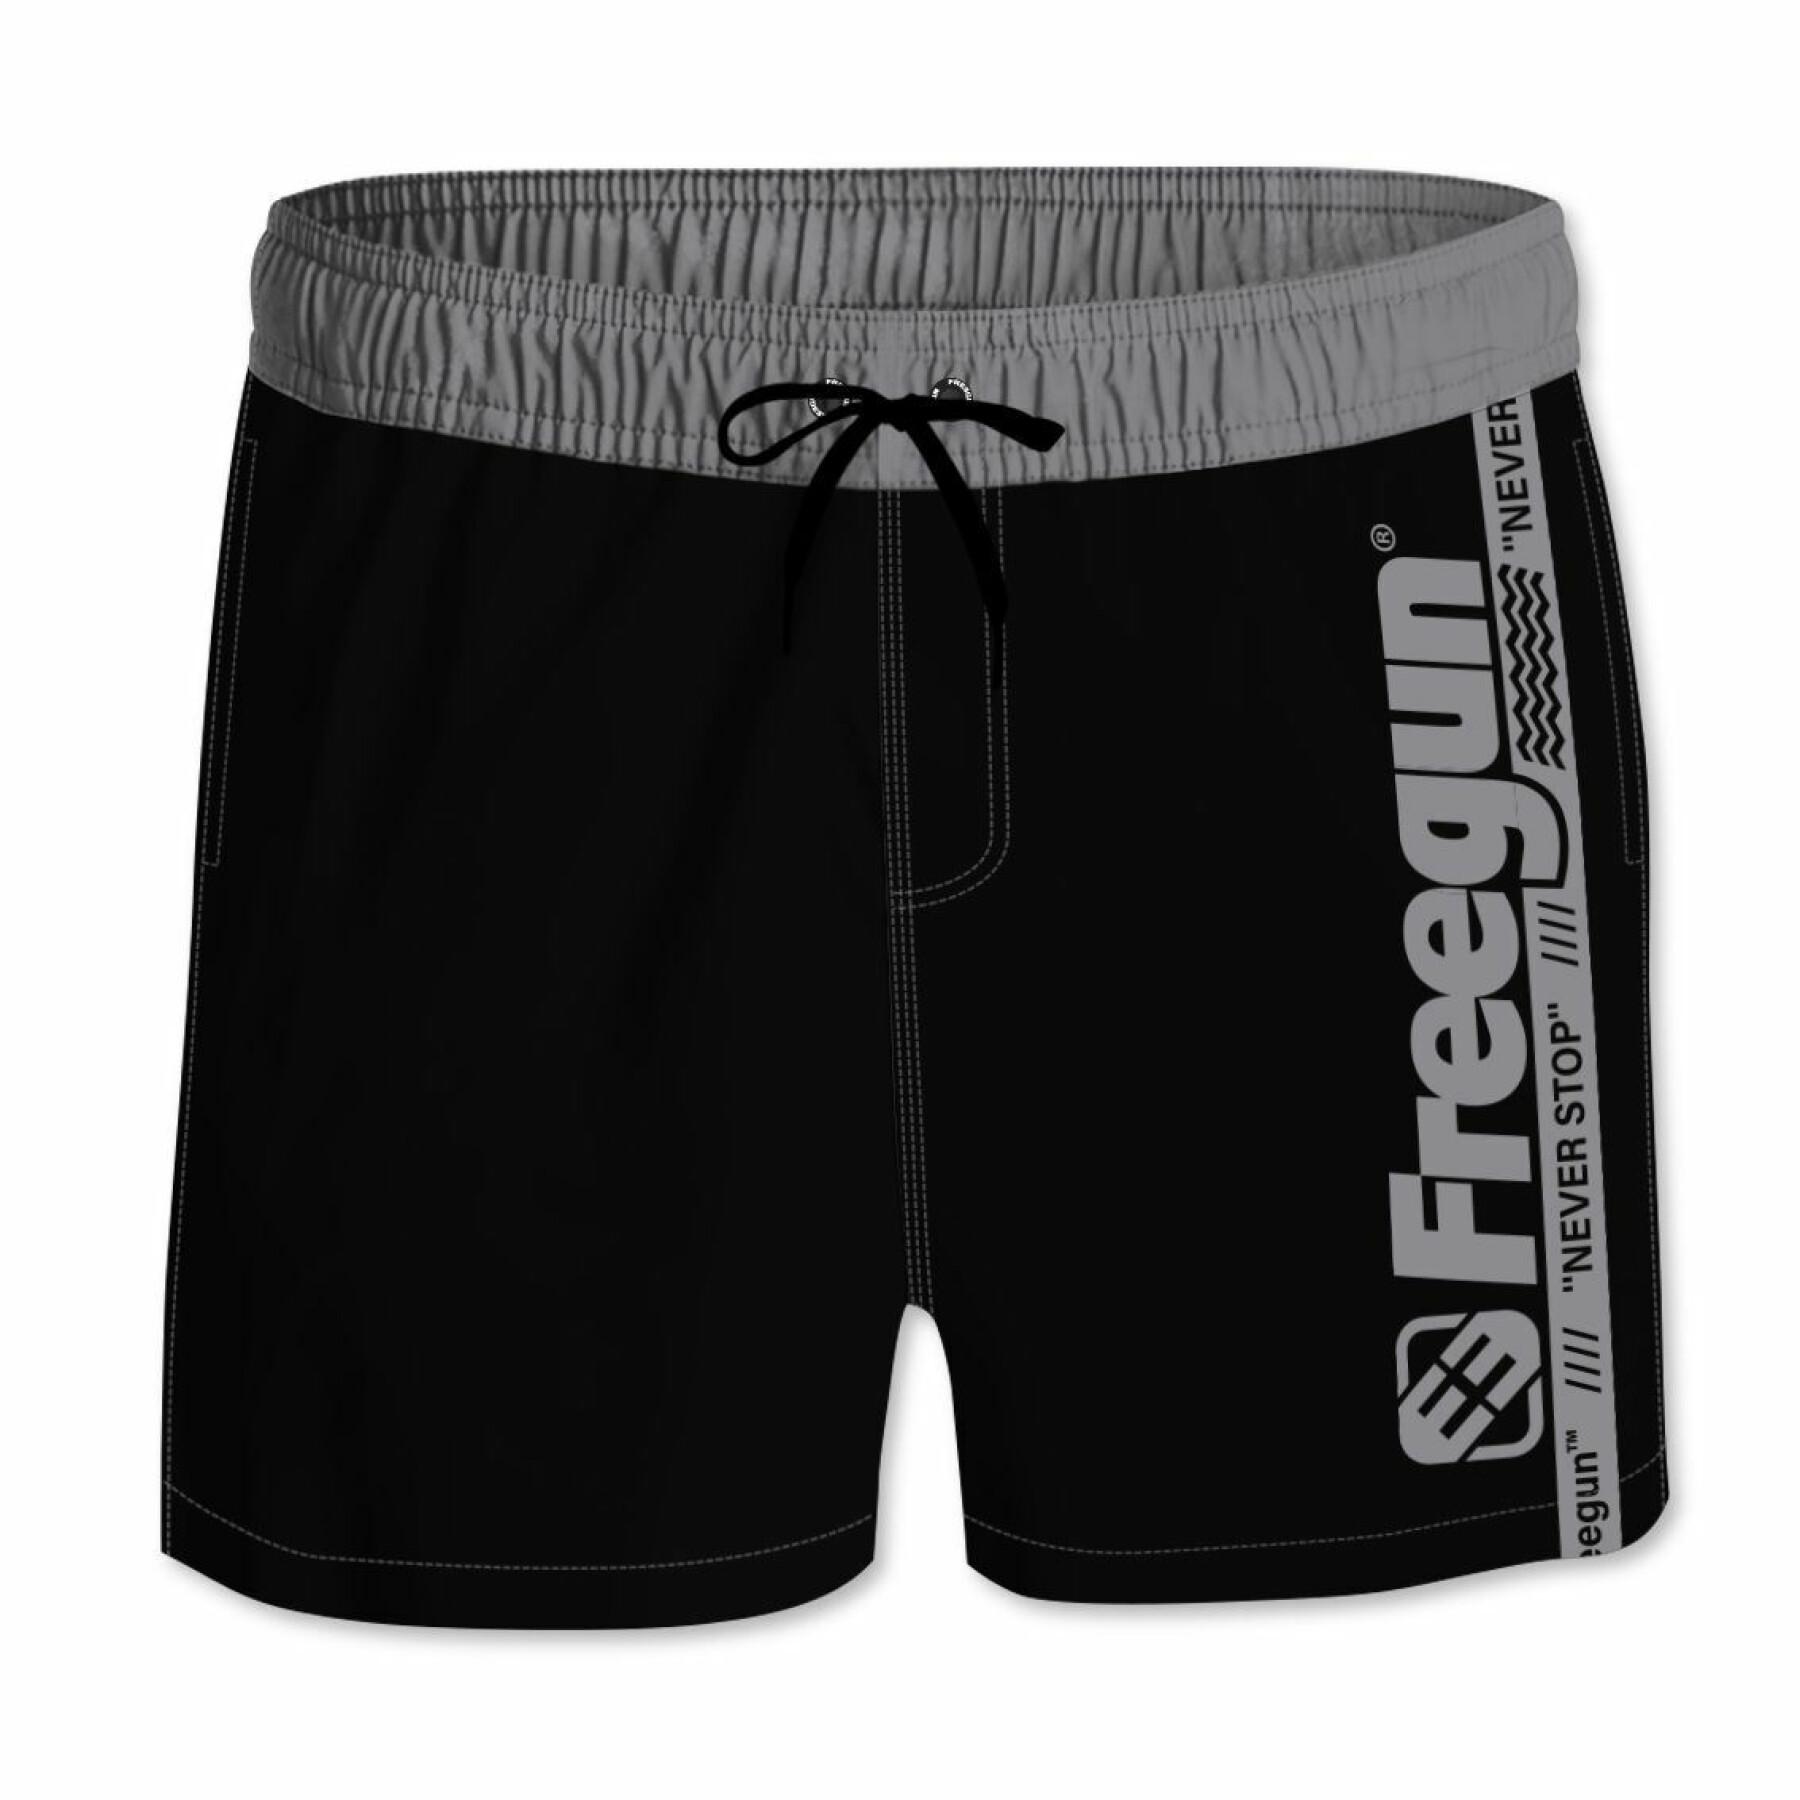 Short swim shorts with all-elastic waistband for children Freegun